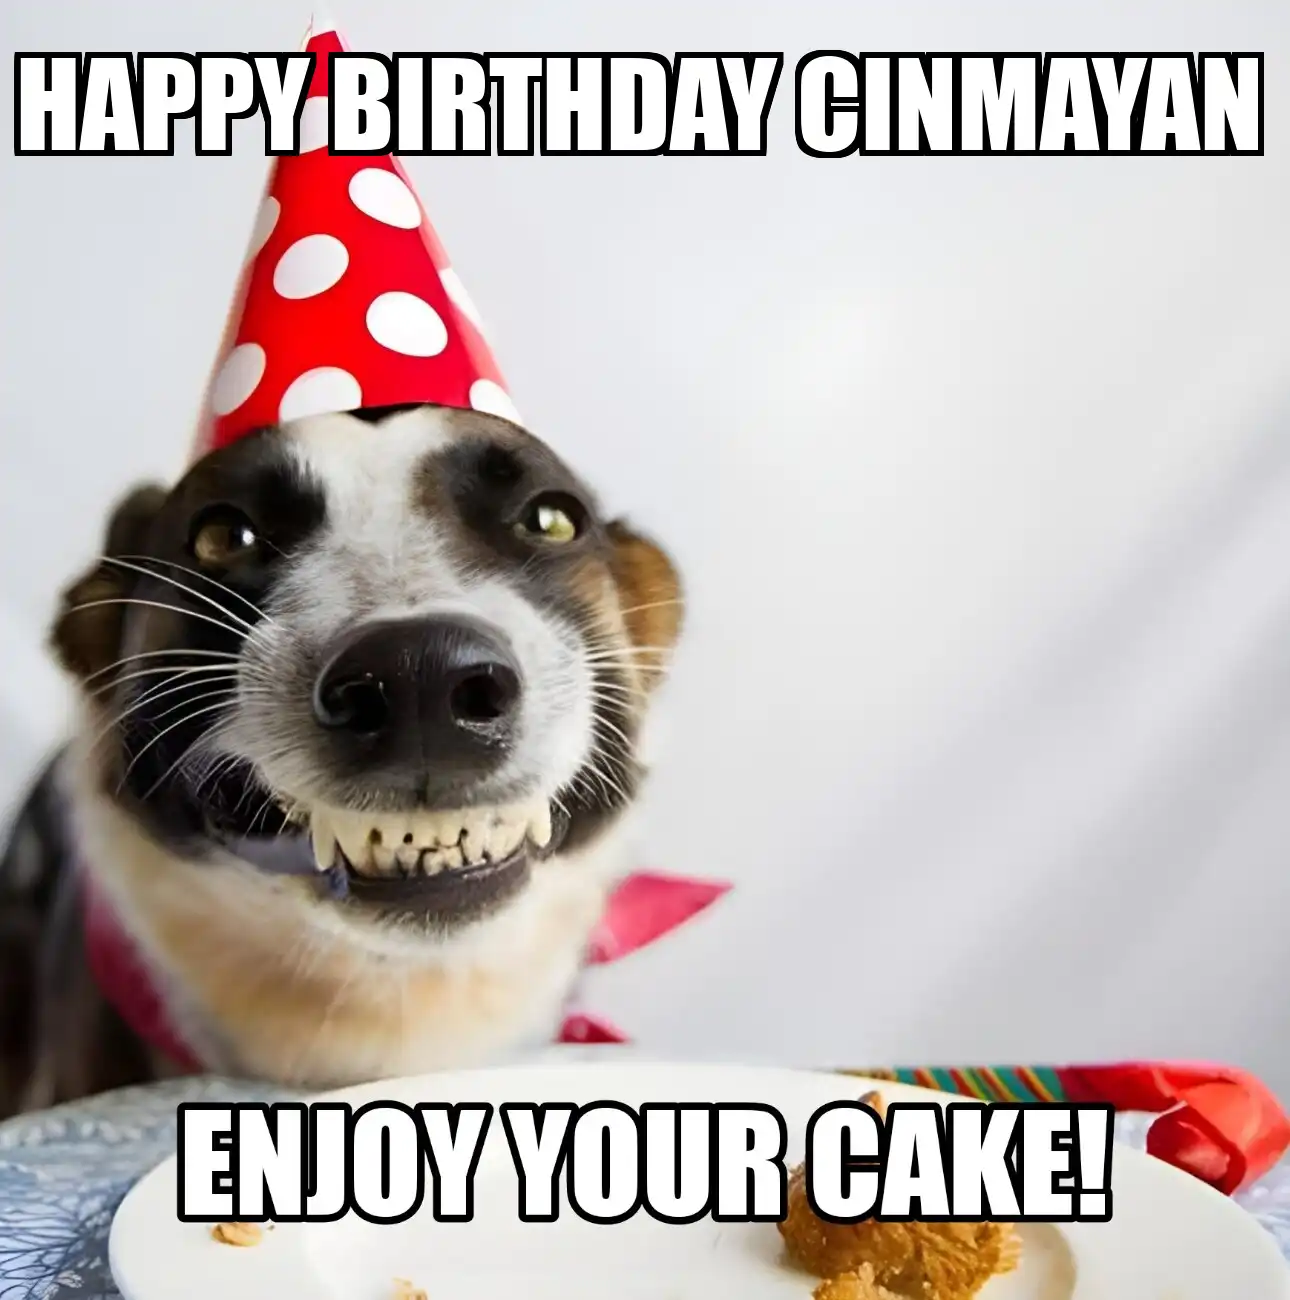 Happy Birthday Cinmayan Enjoy Your Cake Dog Meme